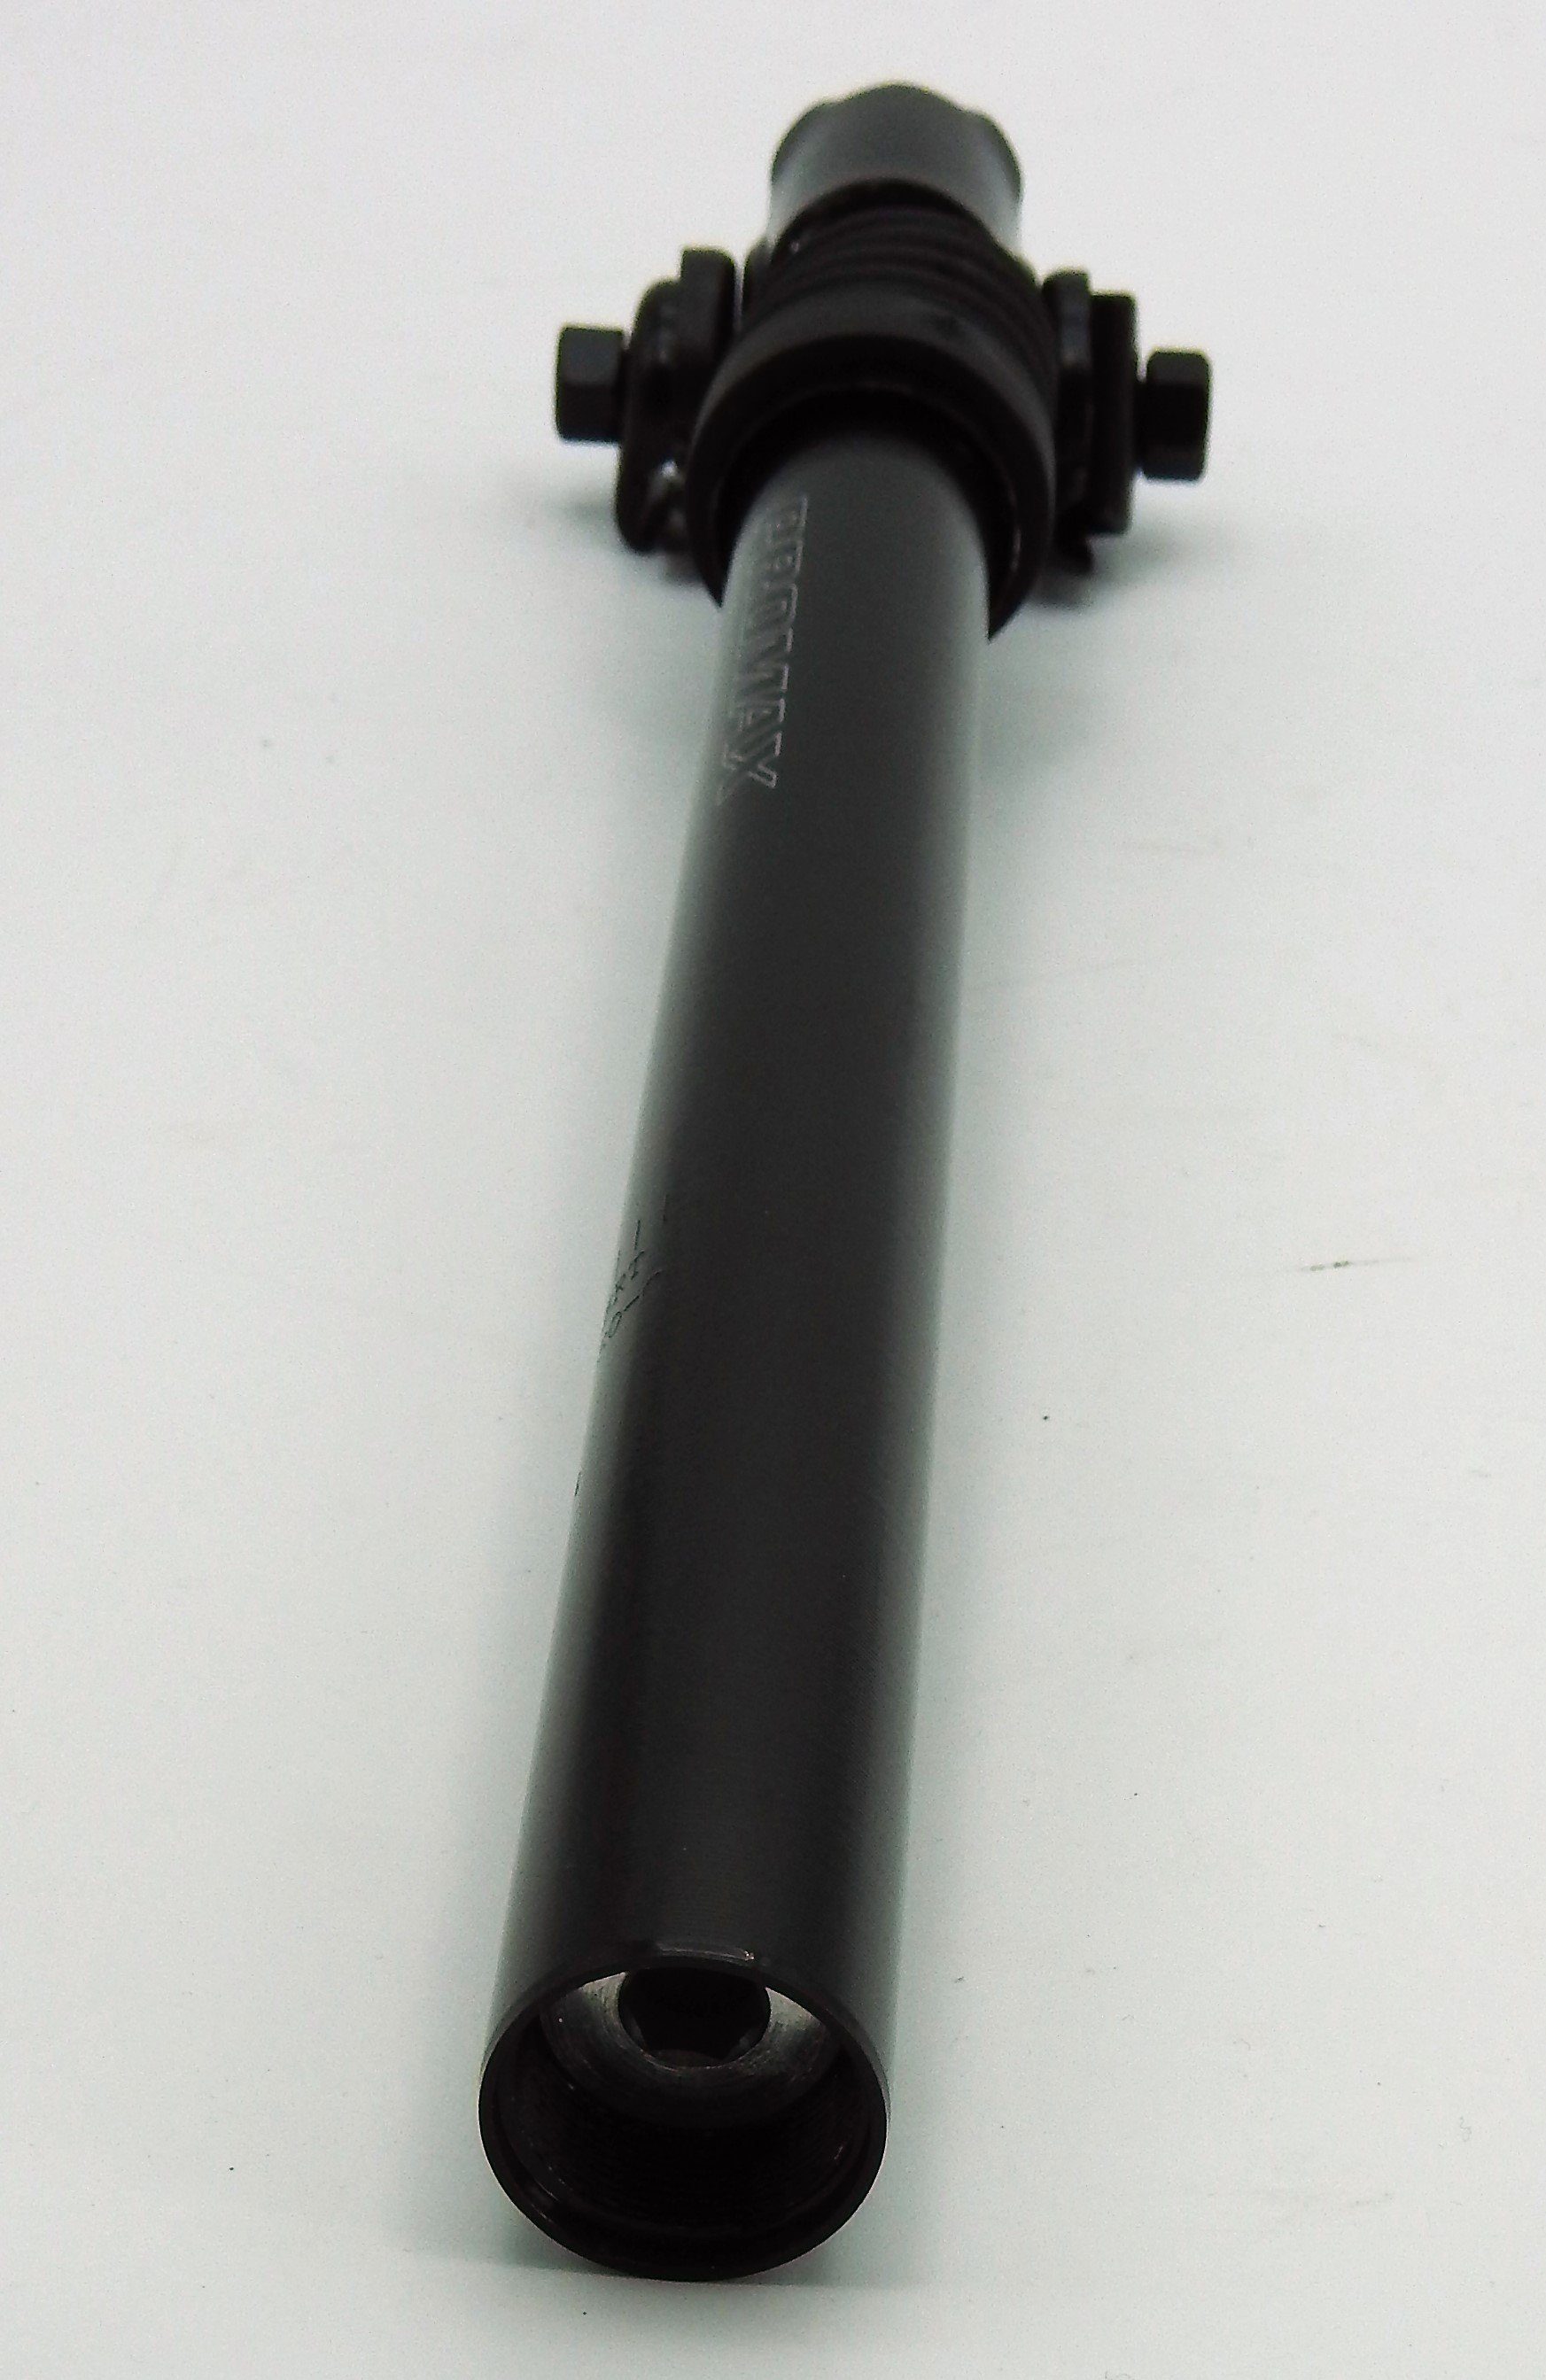 Promax schwarz Kloben PromaxØ 27,2mm Sattelstütze, mit